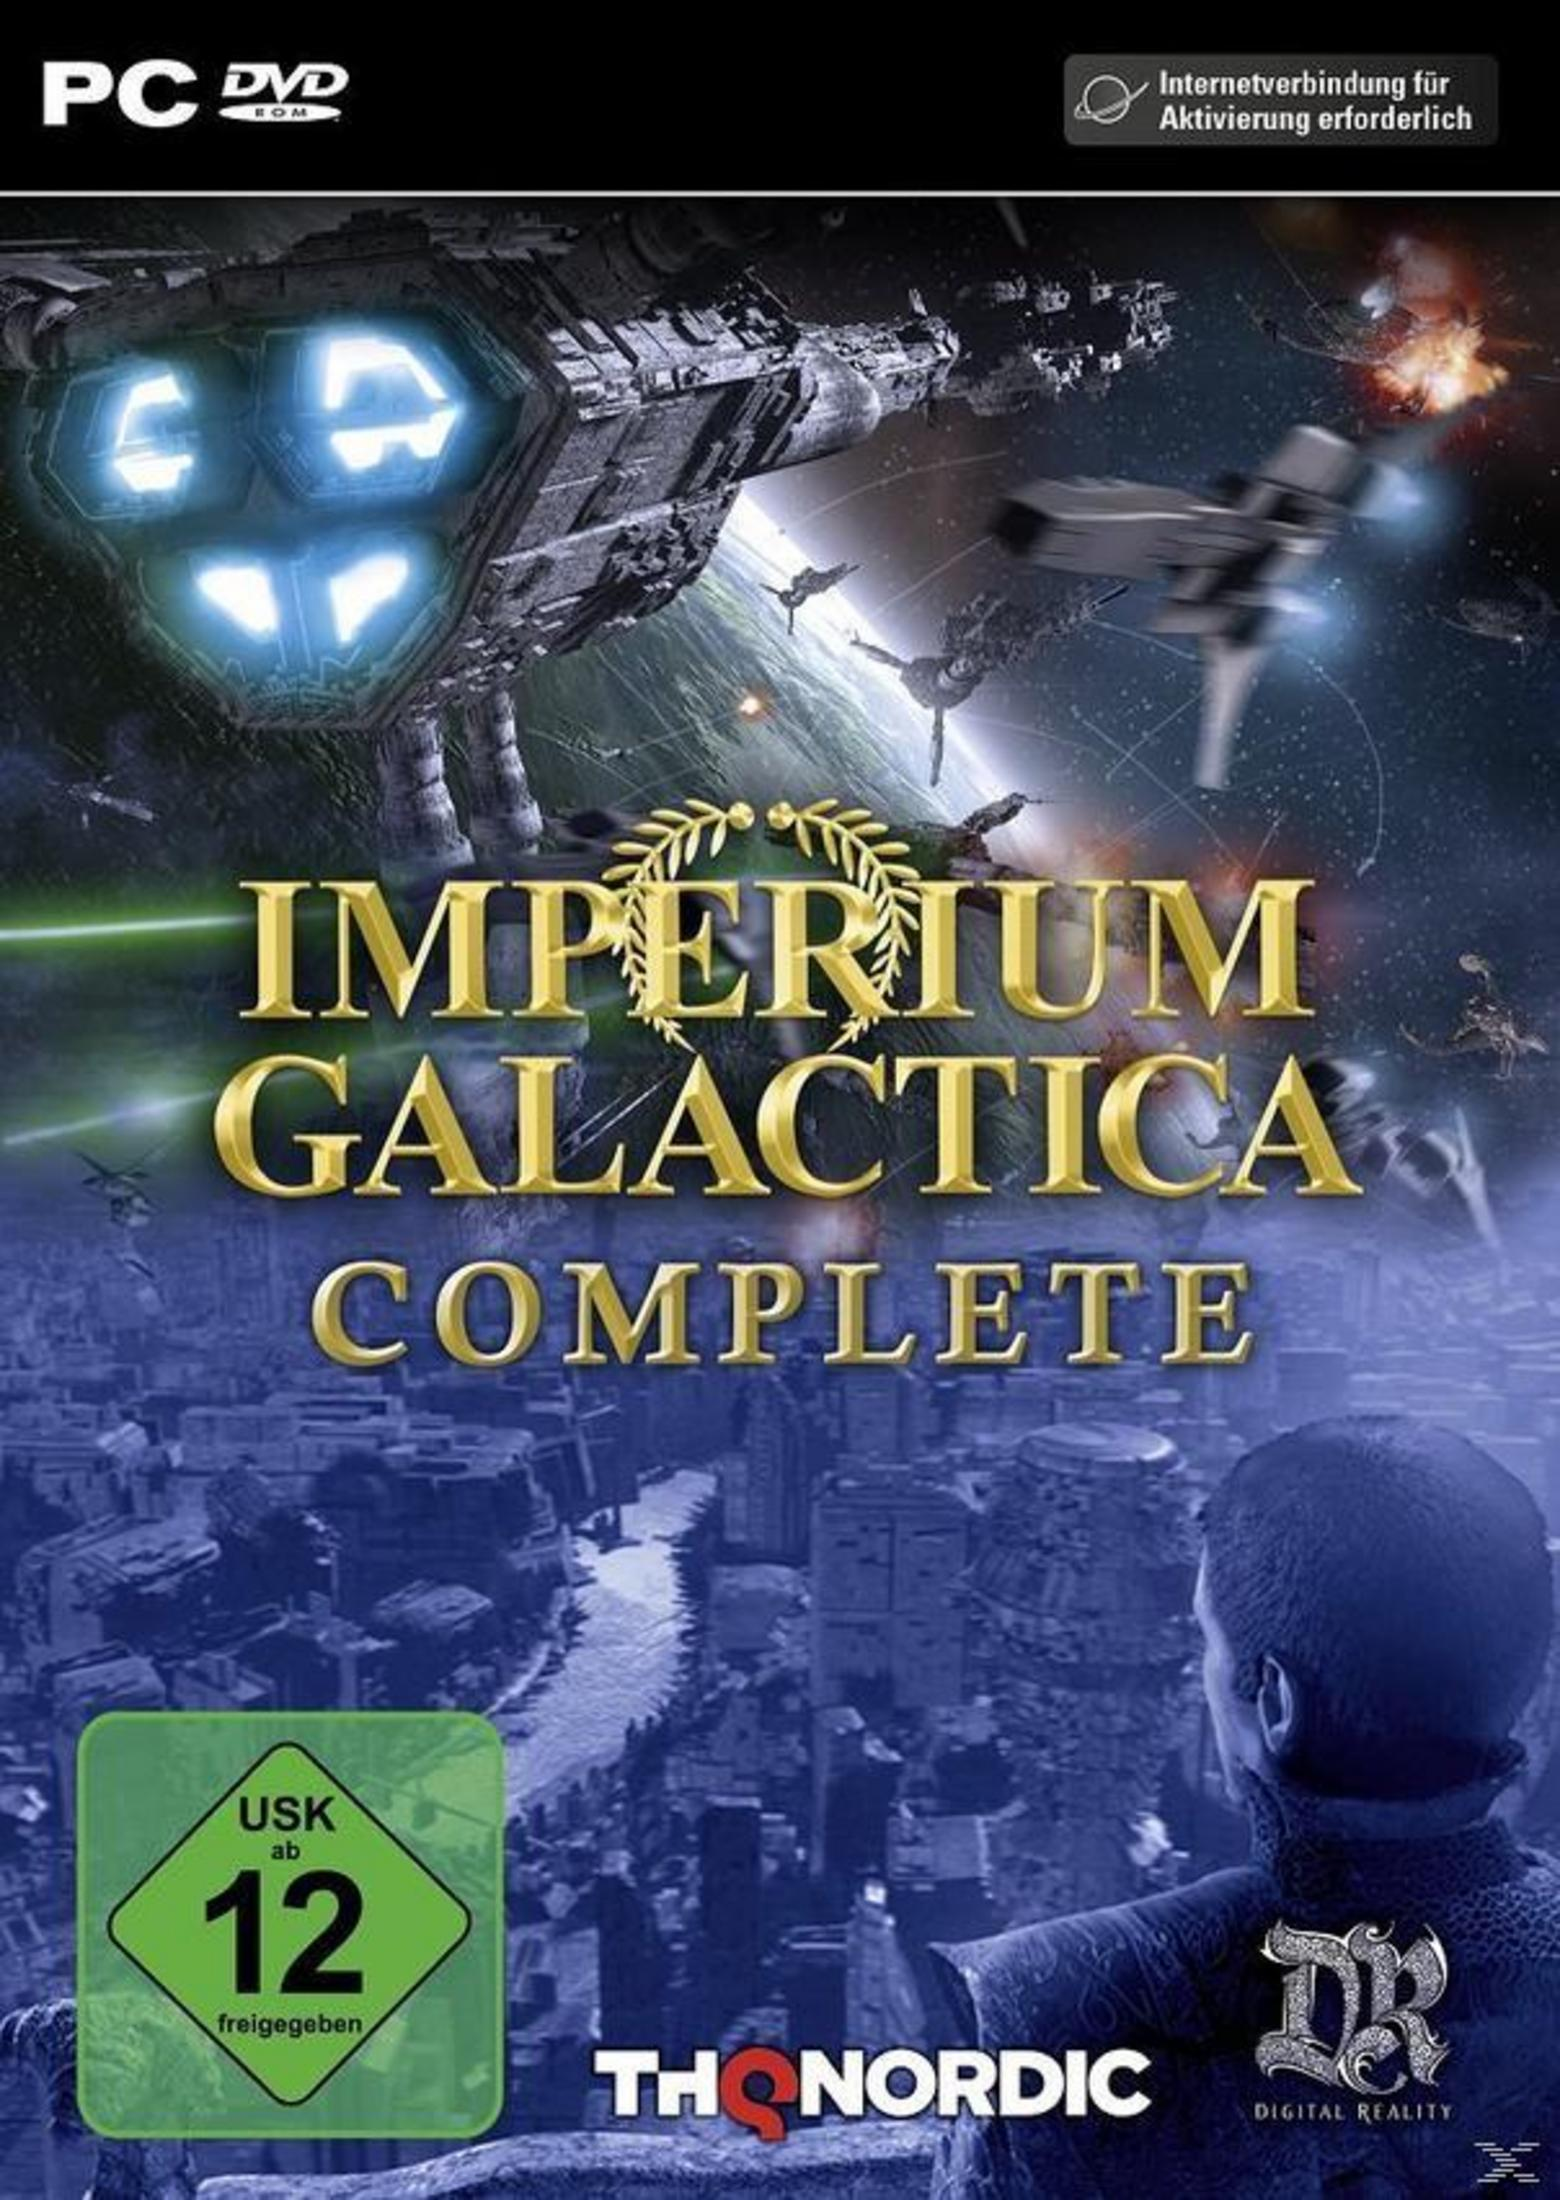 Imperium Galactica Collection Complete - PC [PC]